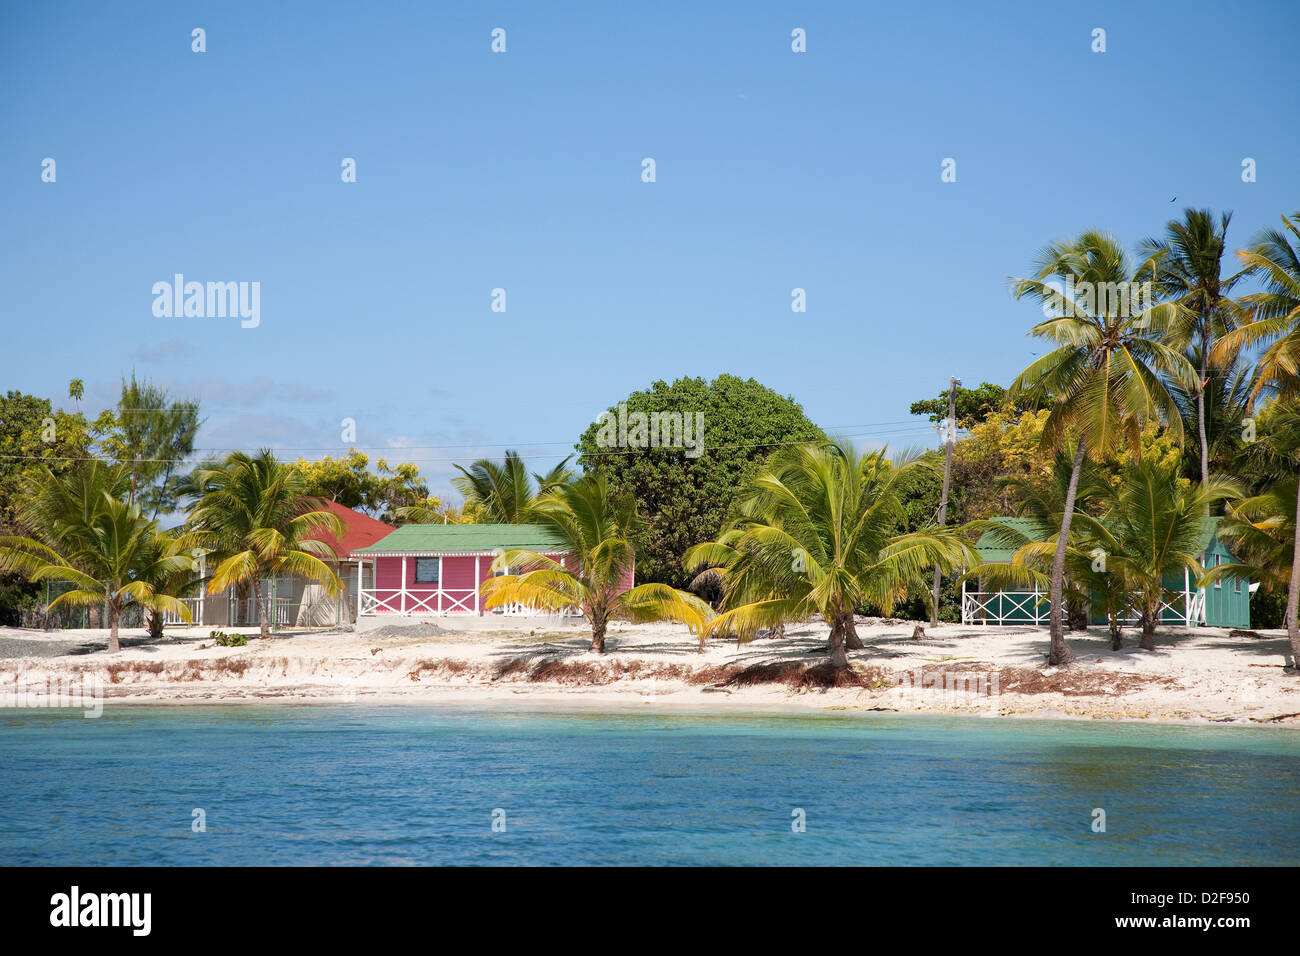 Amerika, Karibik, Insel Hispaniola, Dominikanische Republik, Isla Saona, Meer und Strand mit Palmen Stockfoto